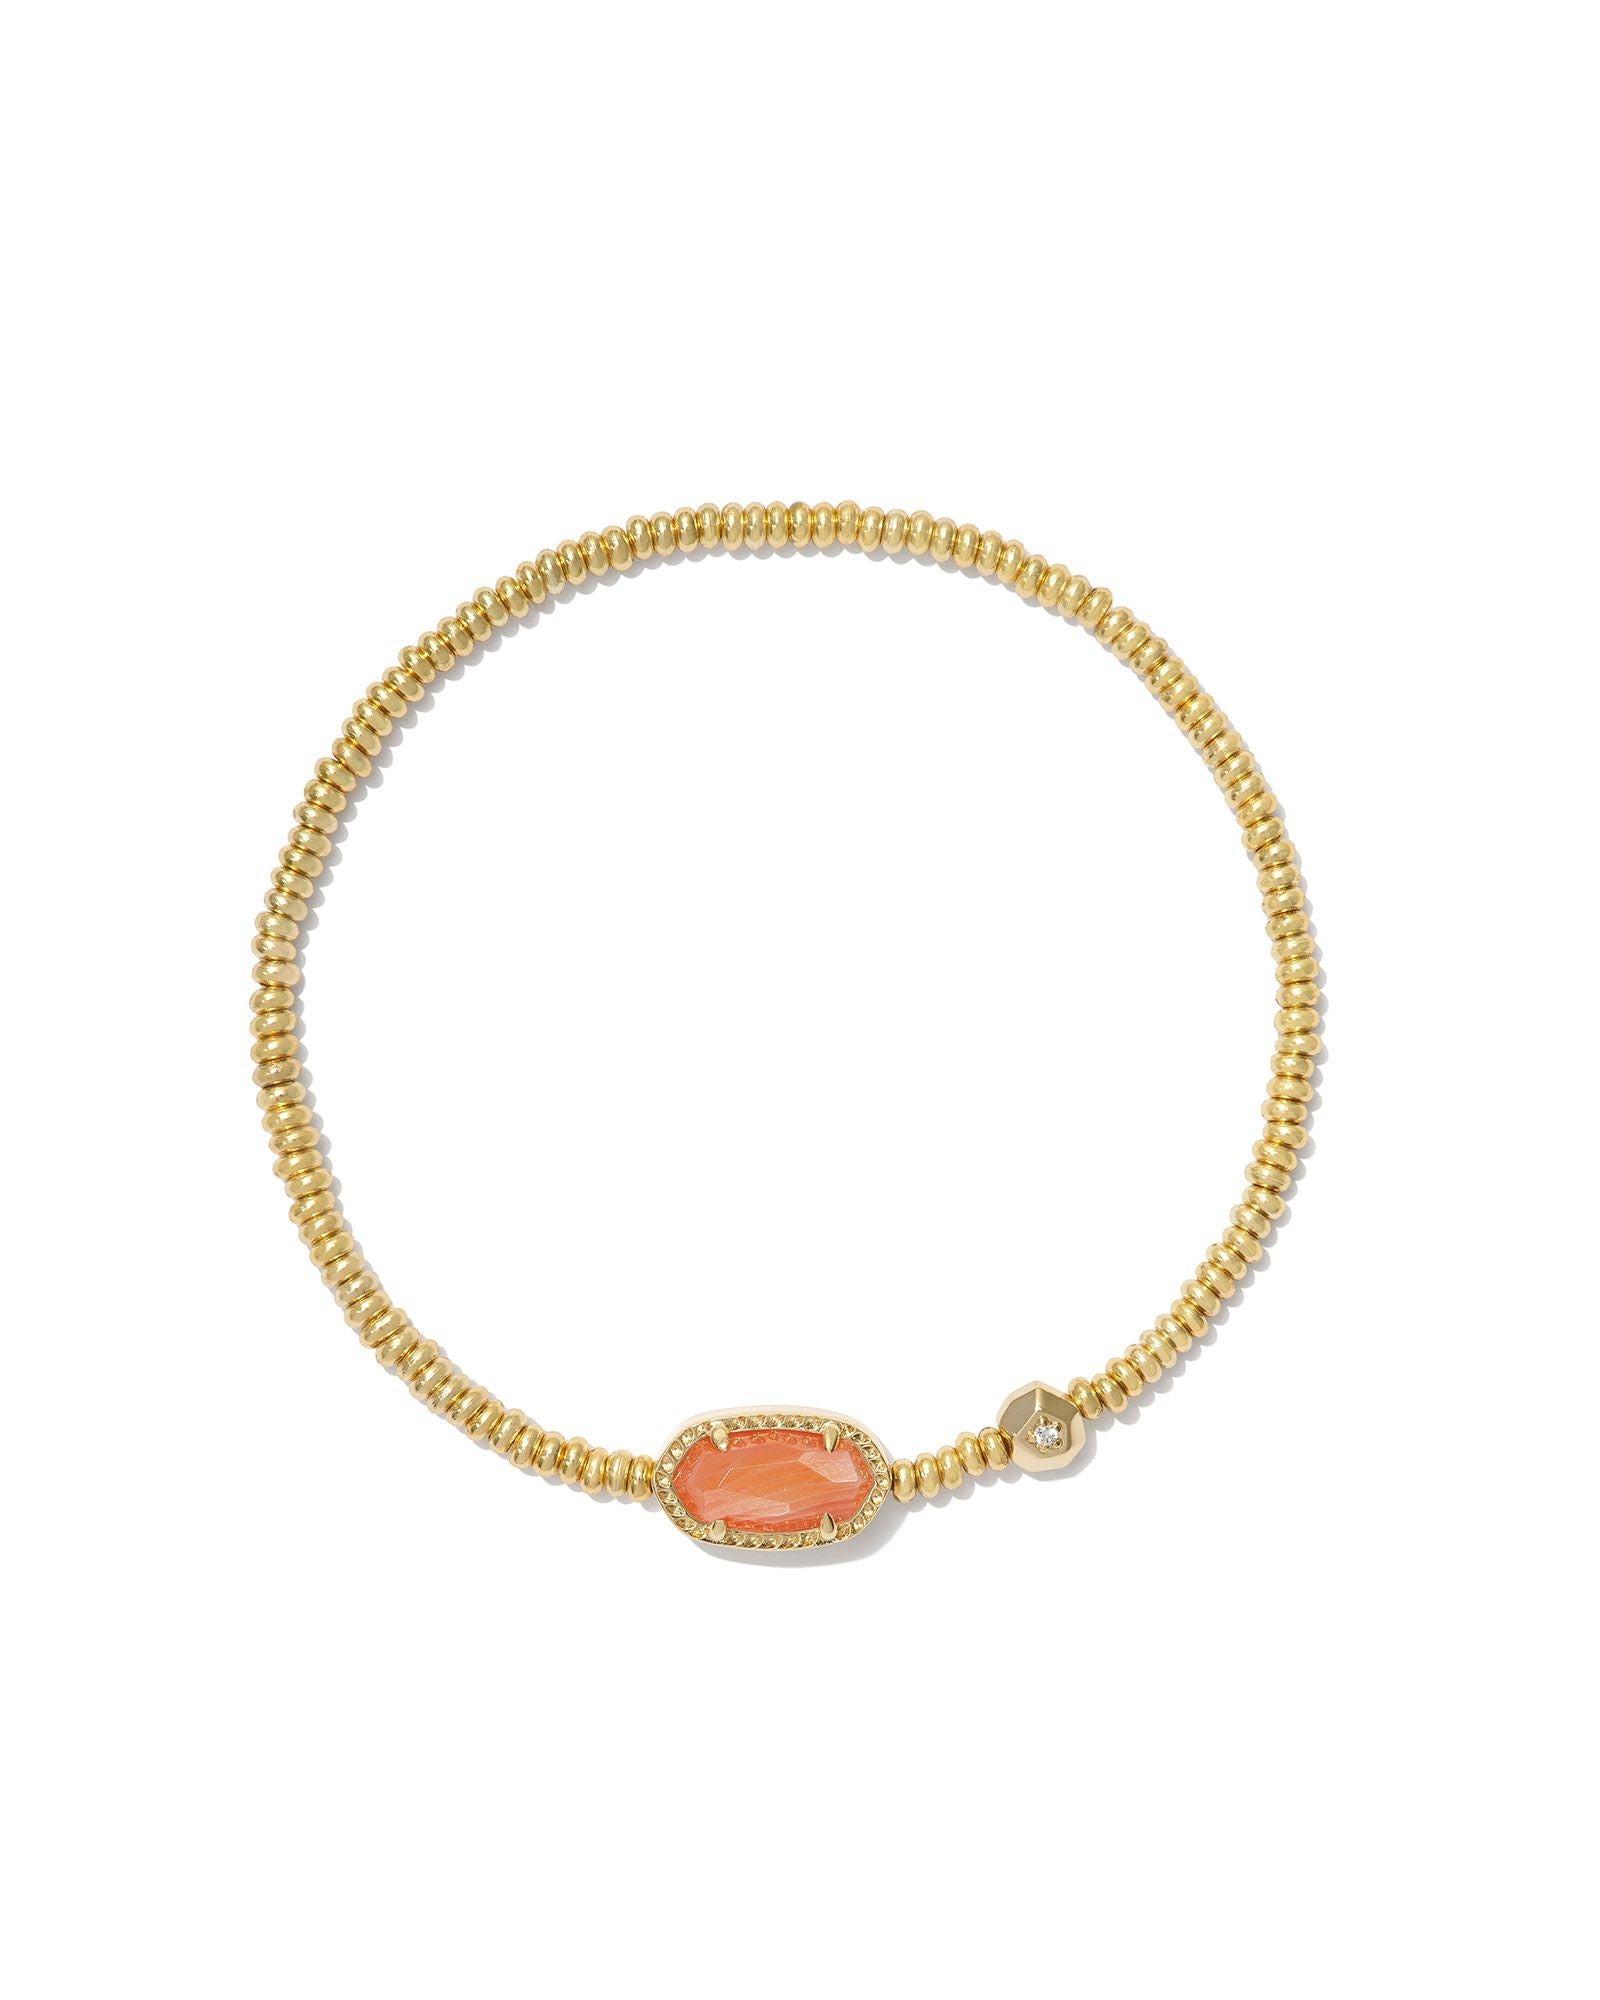 Grayson Gold Stretch Bracelet Orange Banded Agate